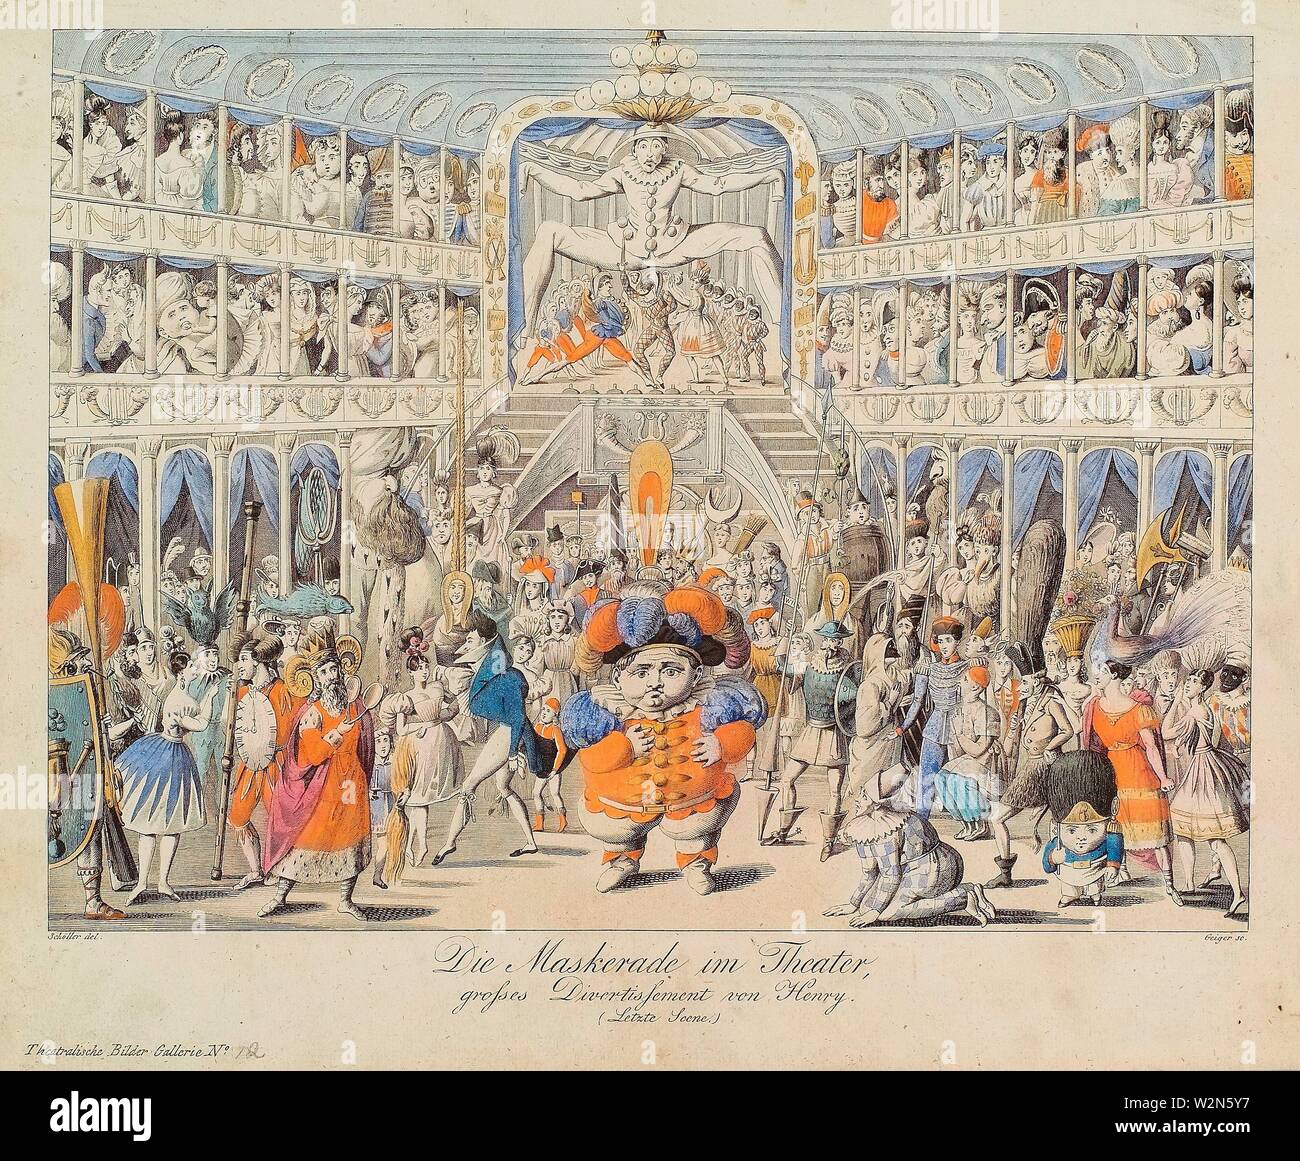 Die im Maskerade Teatro, grosses Divertissement von letzte Henry (escena). Geiger, Andreas, 1765-1856 (Grabador) Schoeller, Johann Christian, Foto de stock